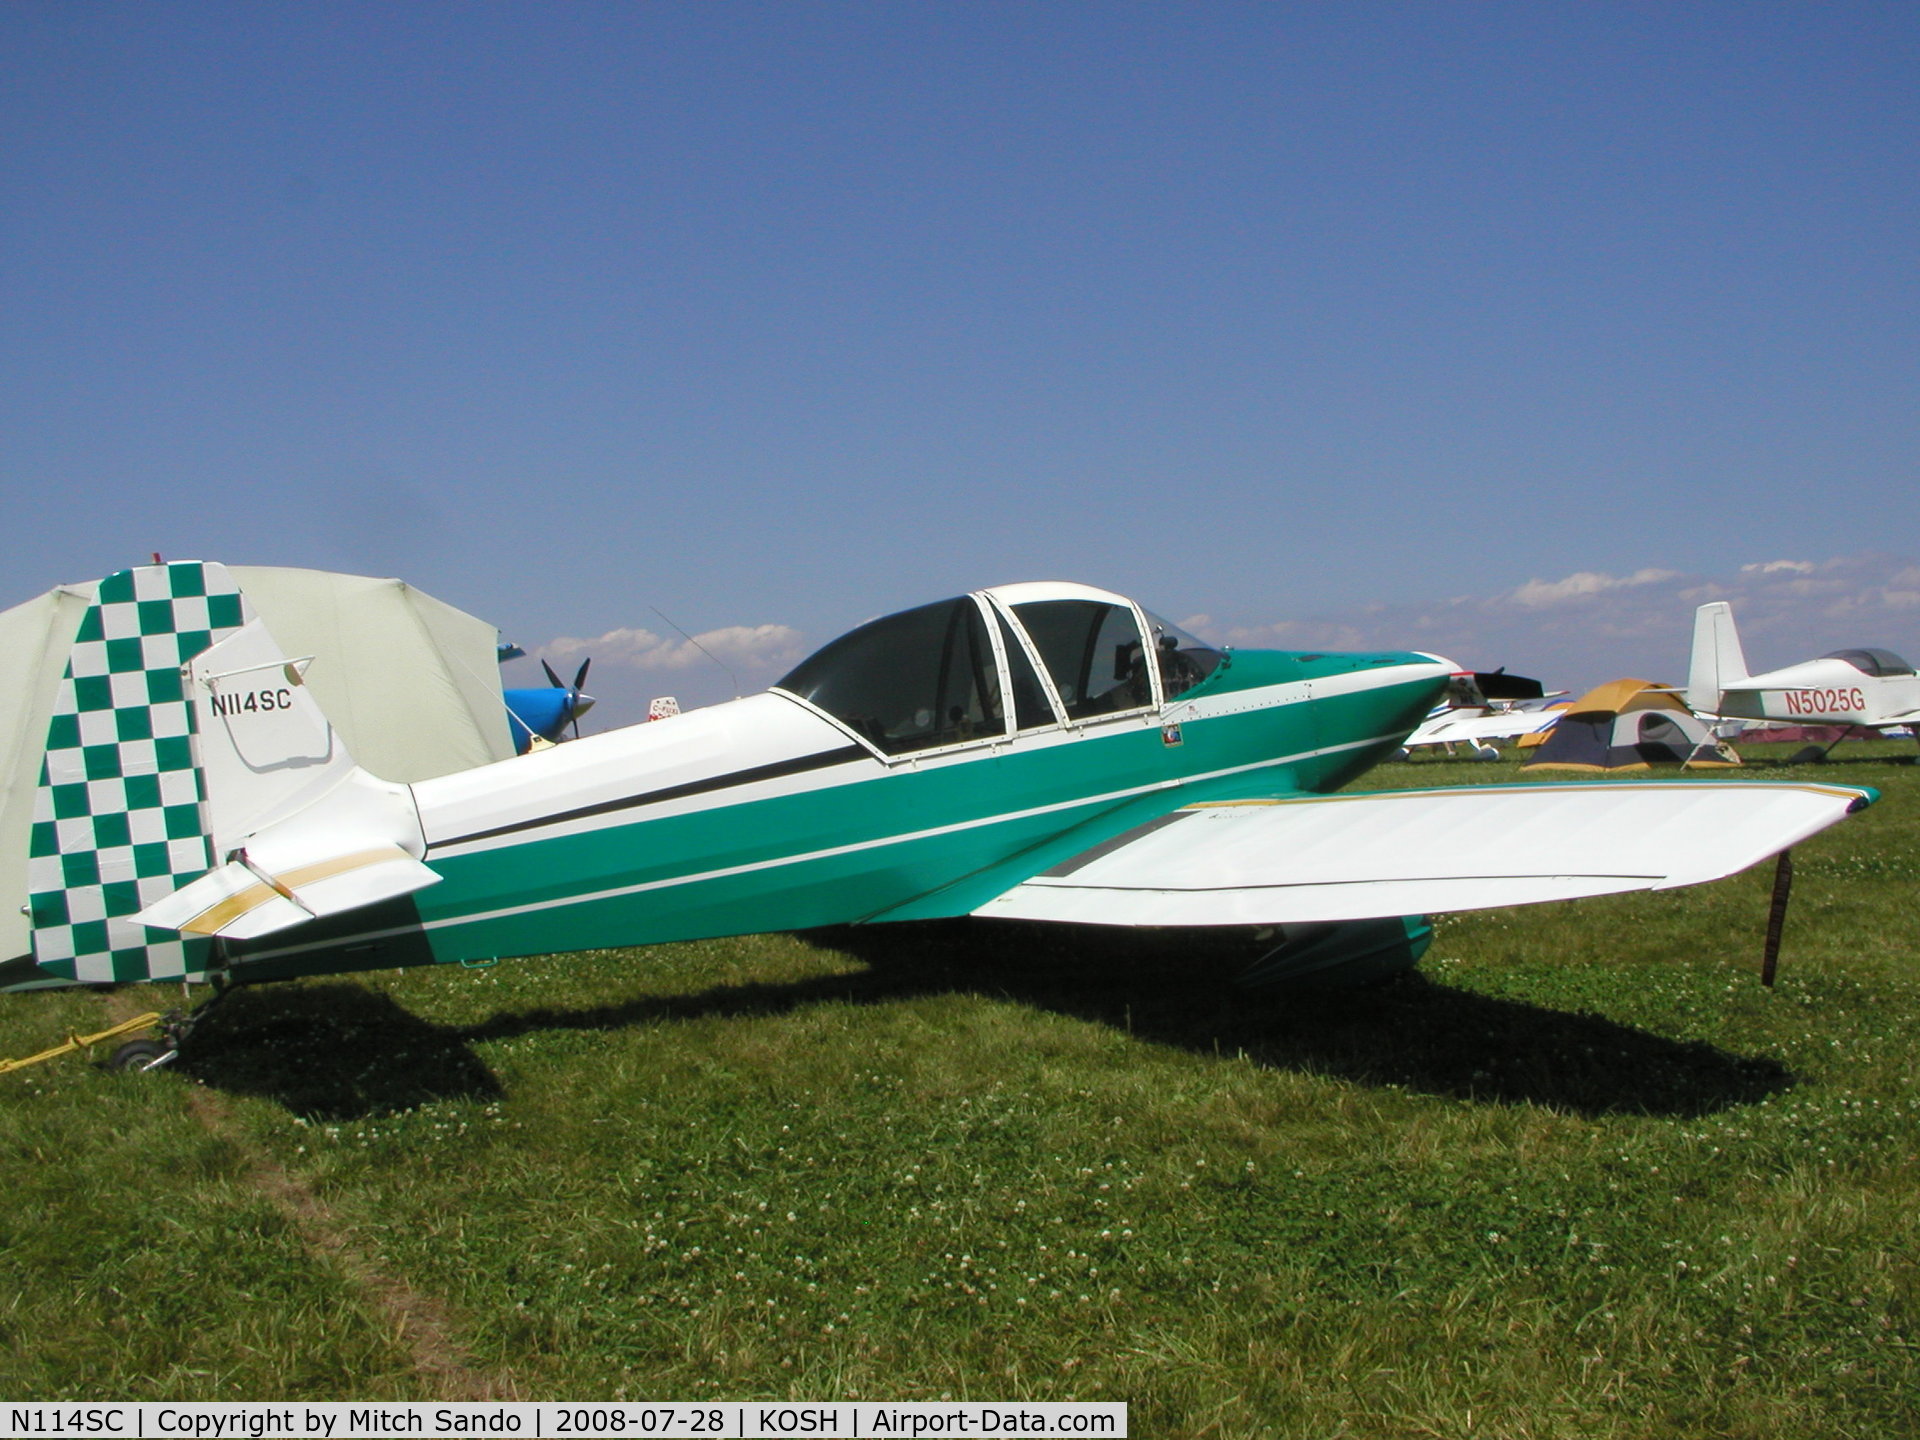 N114SC, 1979 Piel CP-750 Beryl C/N 7-2-50, EAA AirVenture 2008.